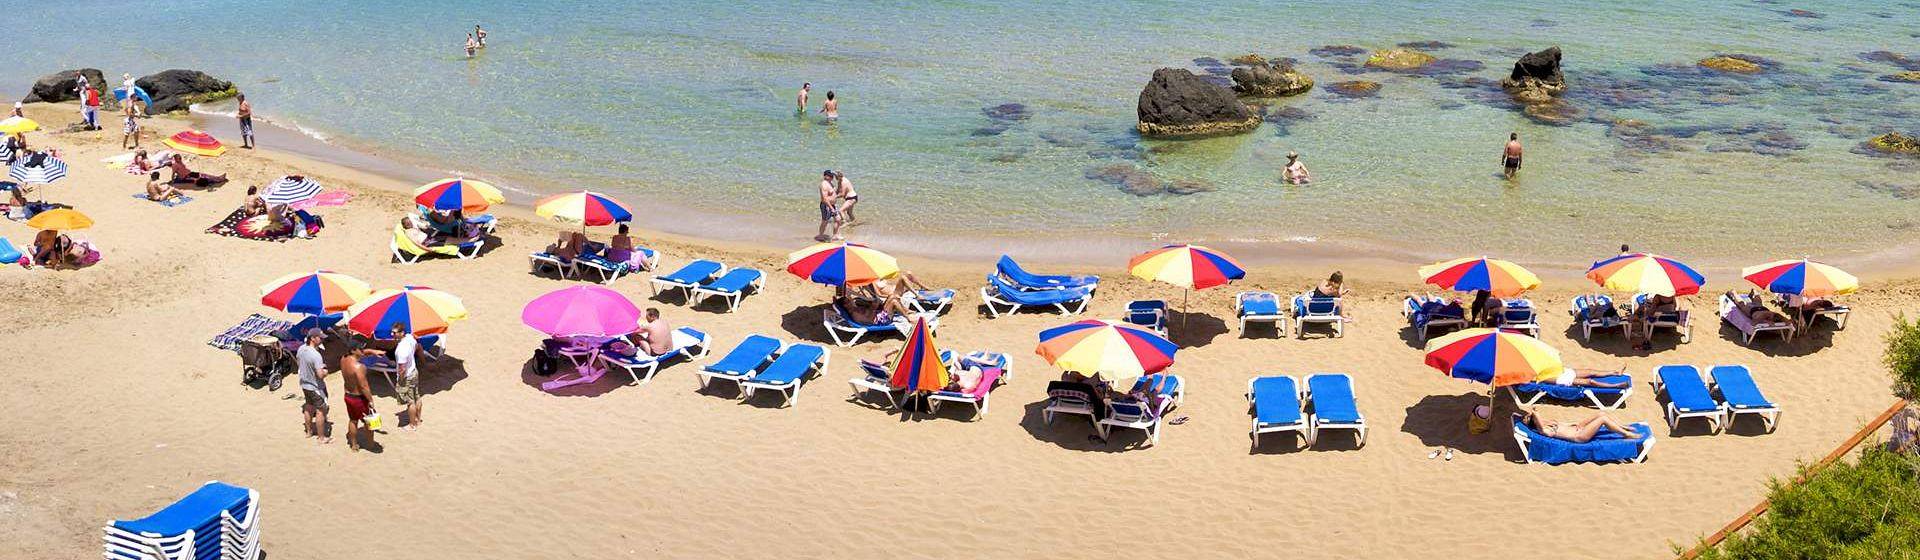 Holidays to Playa D'en Bossa Image